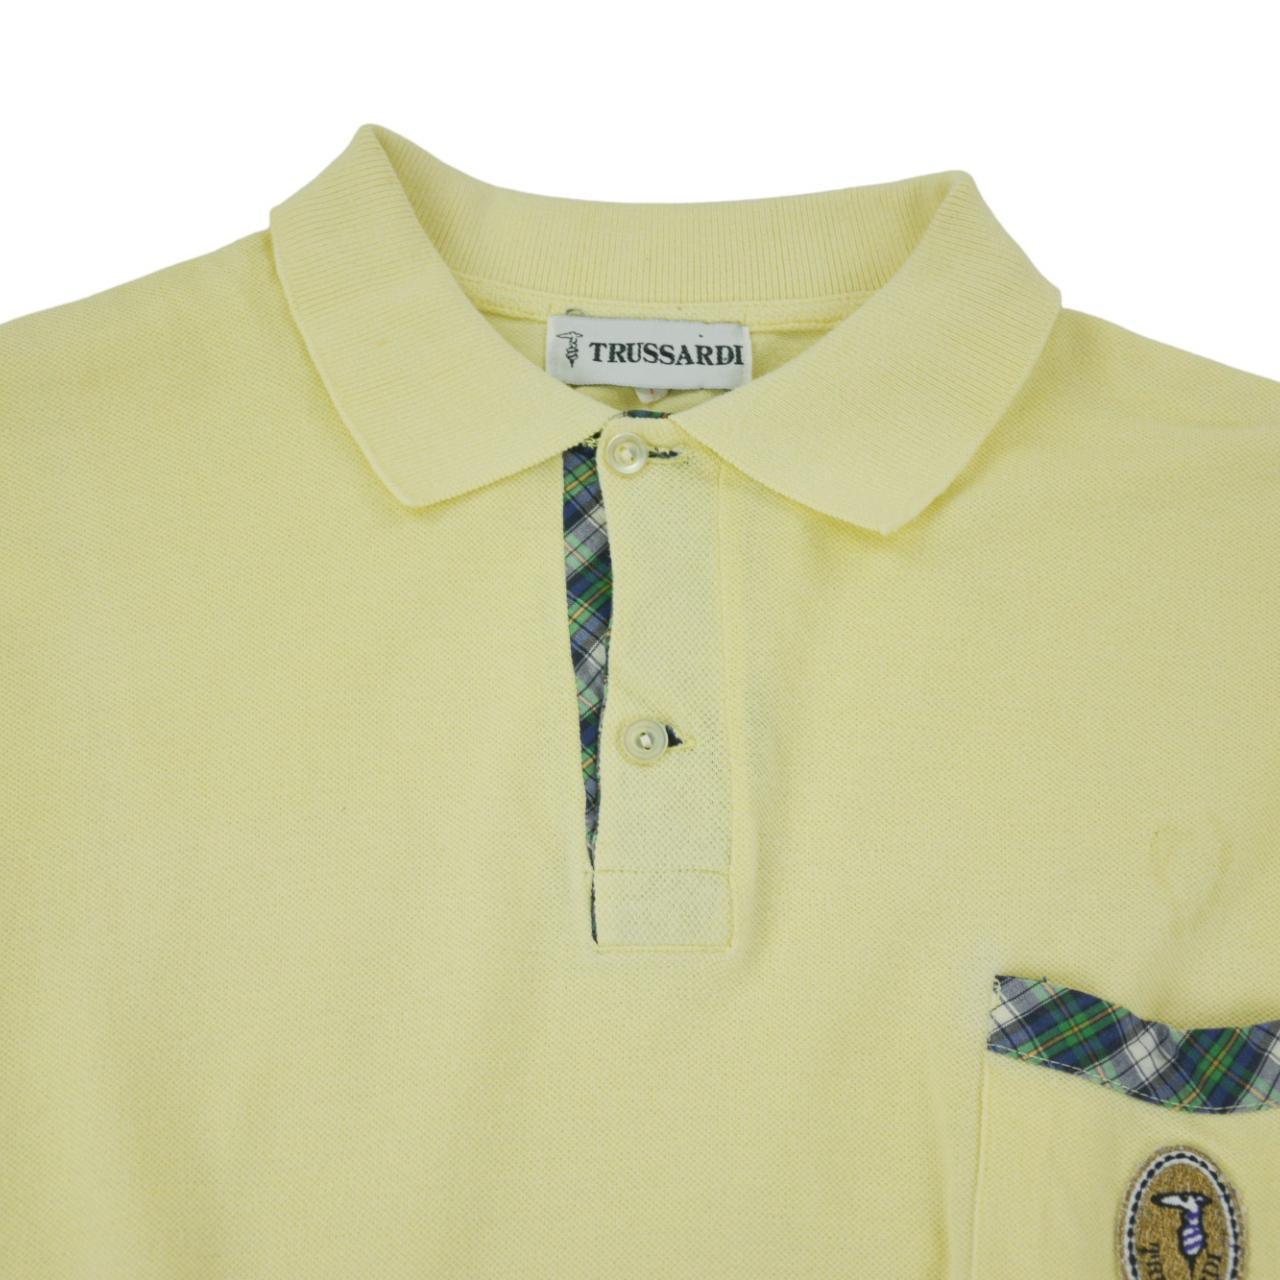 Vintage Trussardi Polo Shirt Size M - Known Source